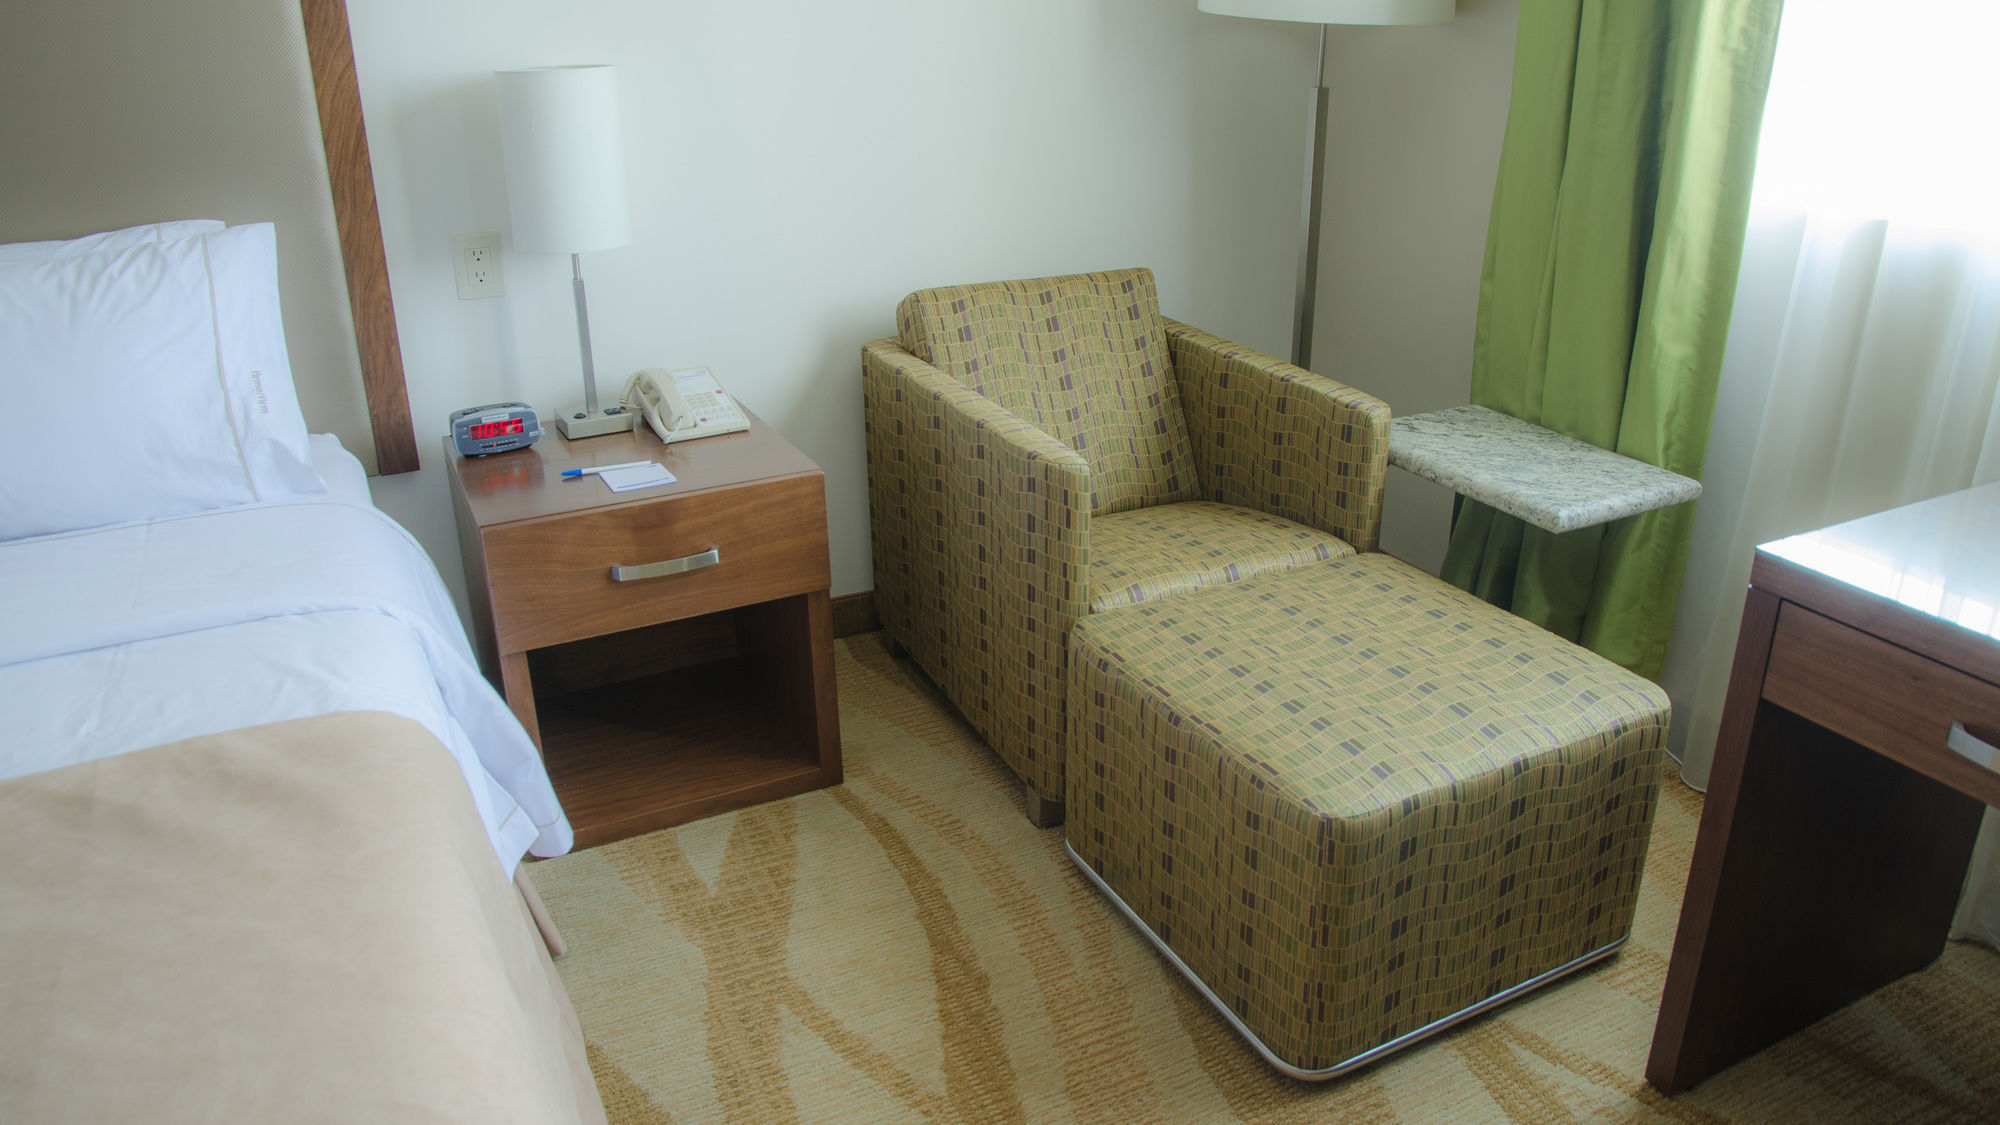 Holiday Inn Express and Suites Celaya in Celaya!